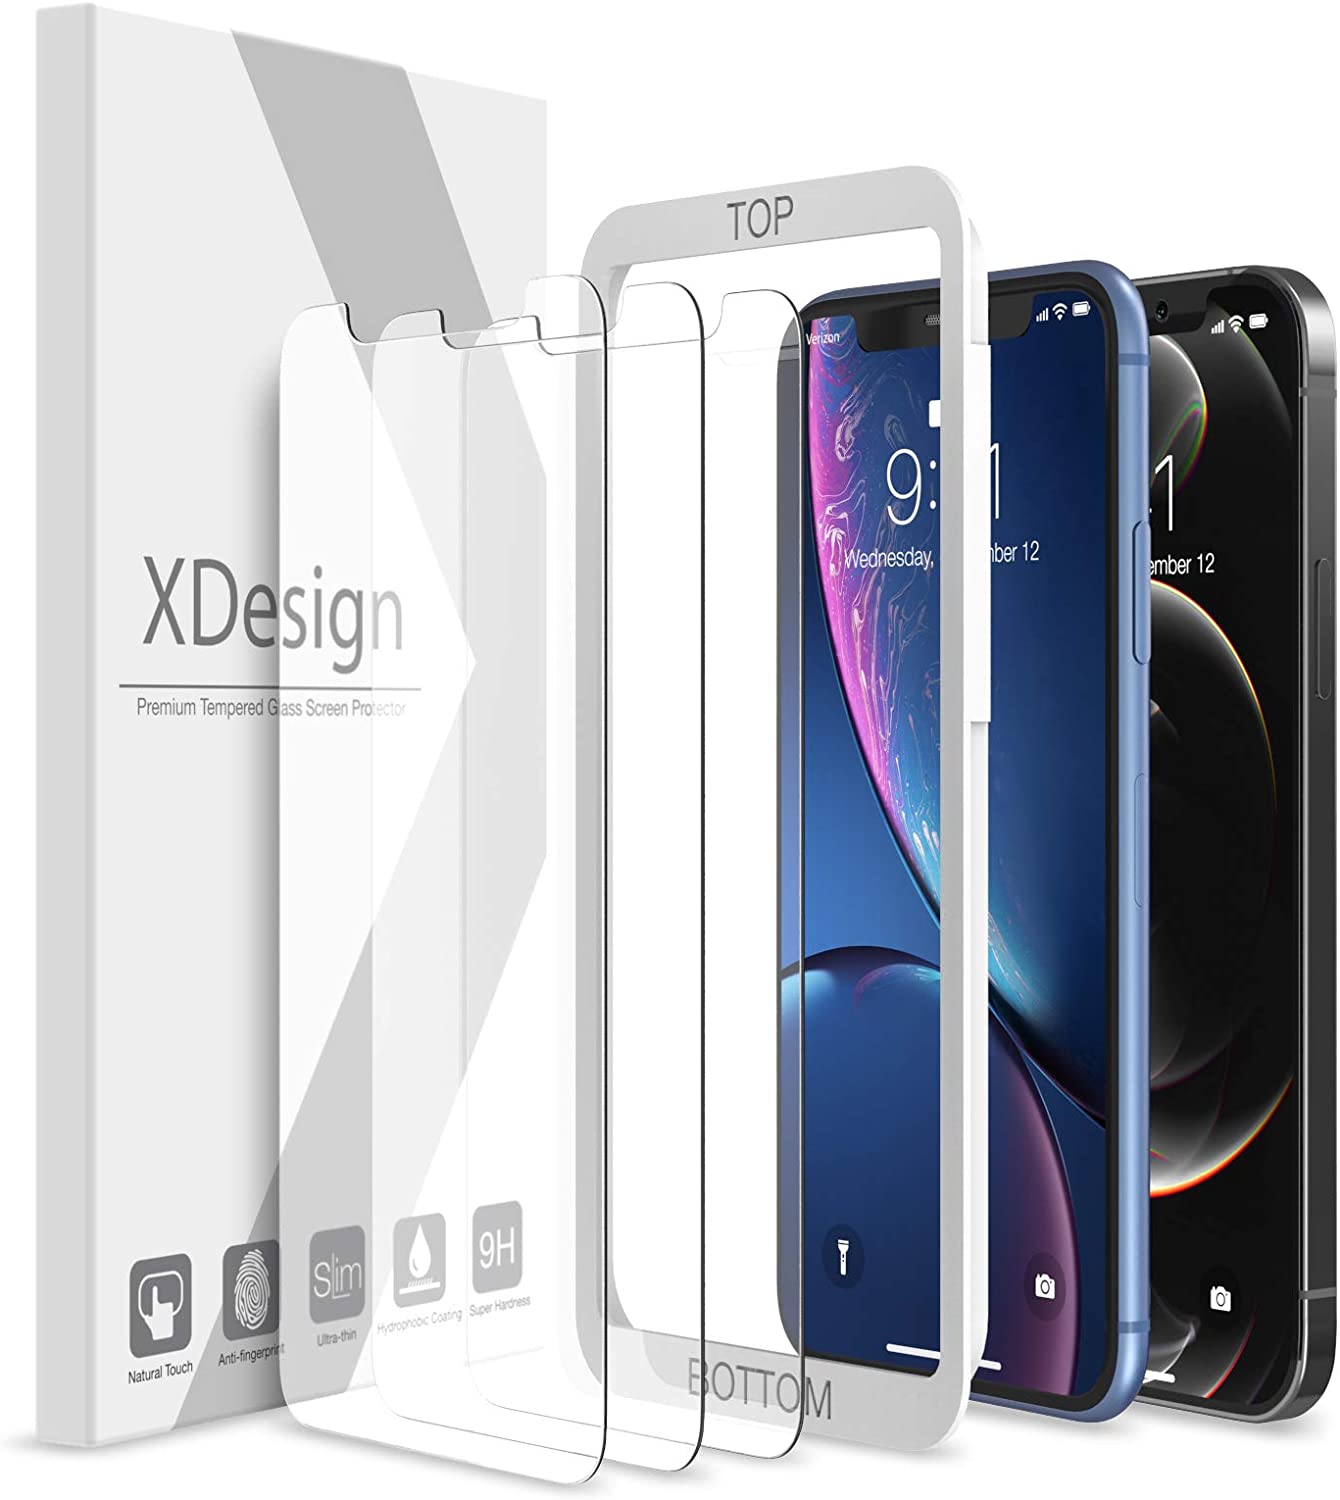 XDesign Transparent iPhone Screen Protectors, 3-Pack